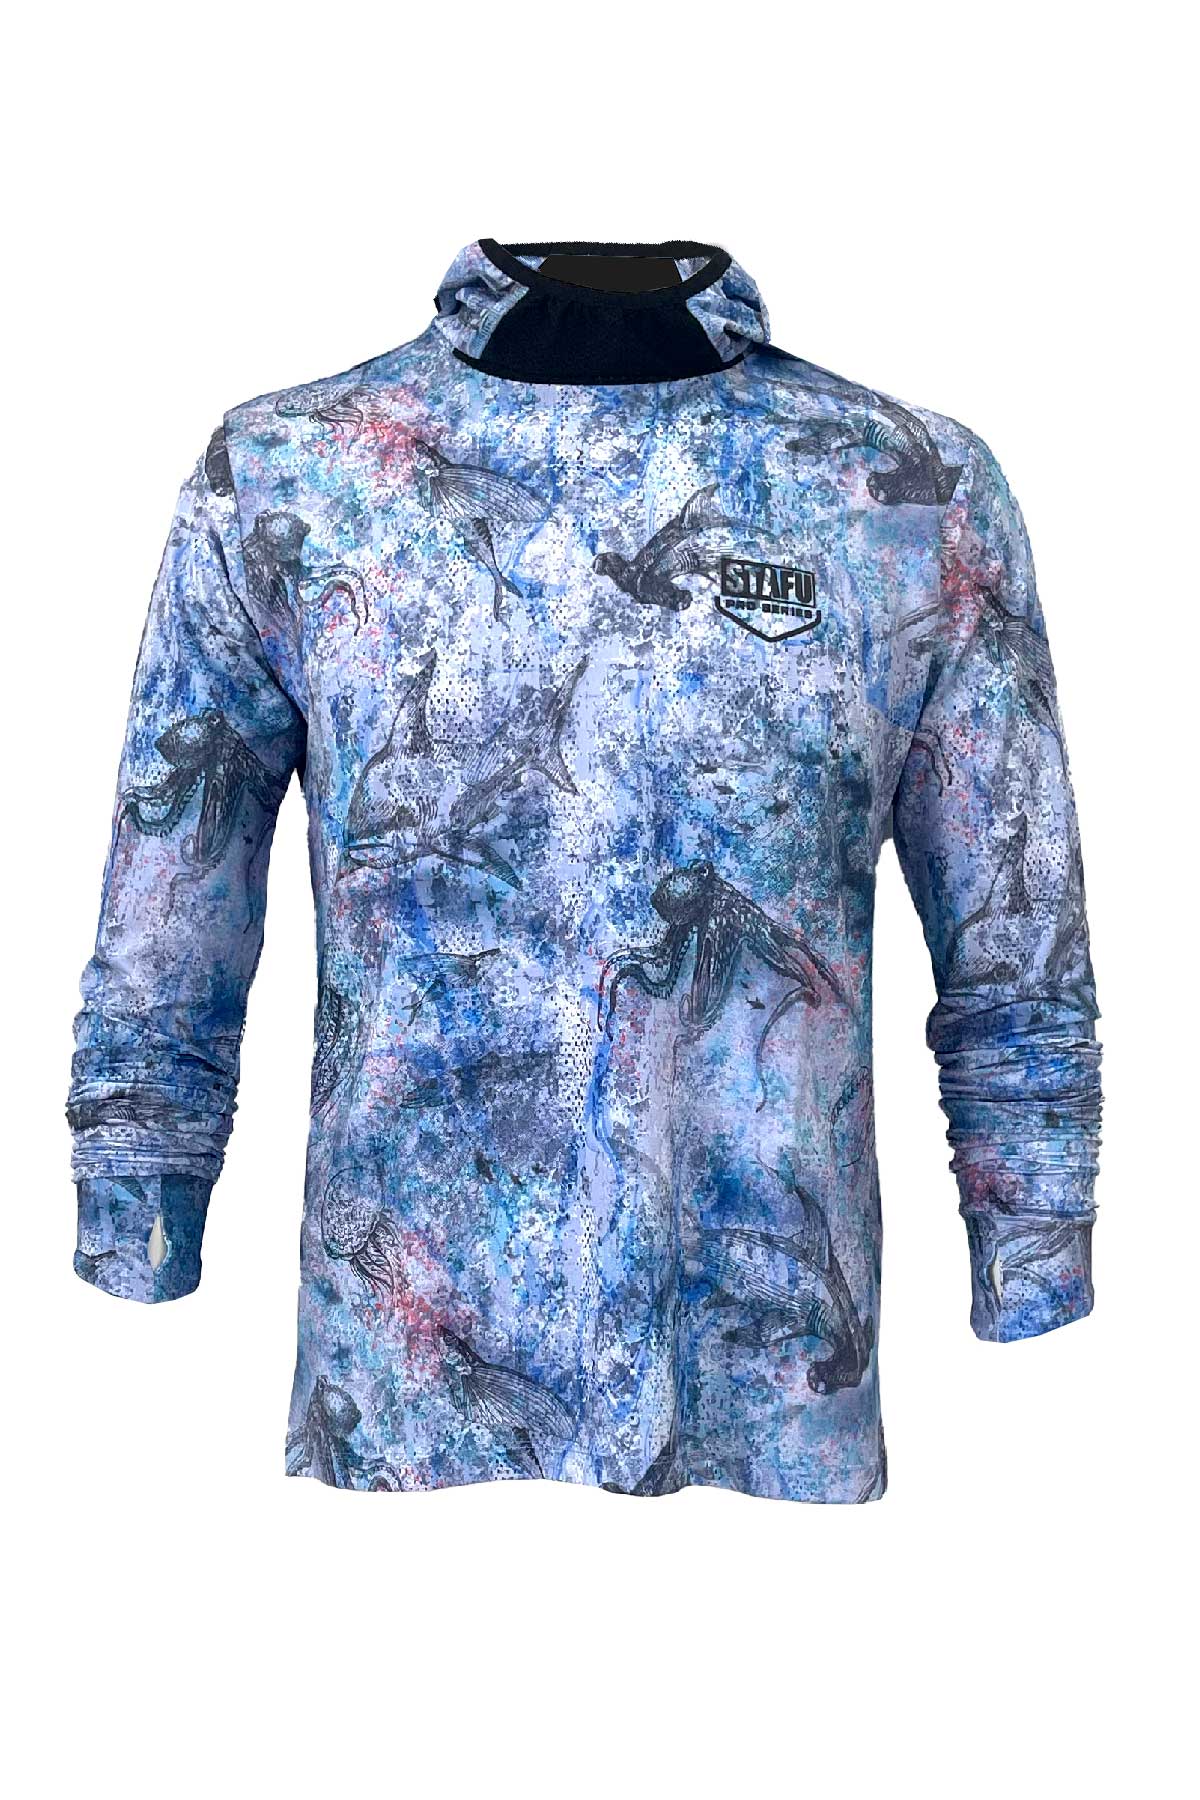 Haka Men's Hooded Long Sleeve Fisherman Sailor Hammerhead Patterned Blue UV Protected Shirt